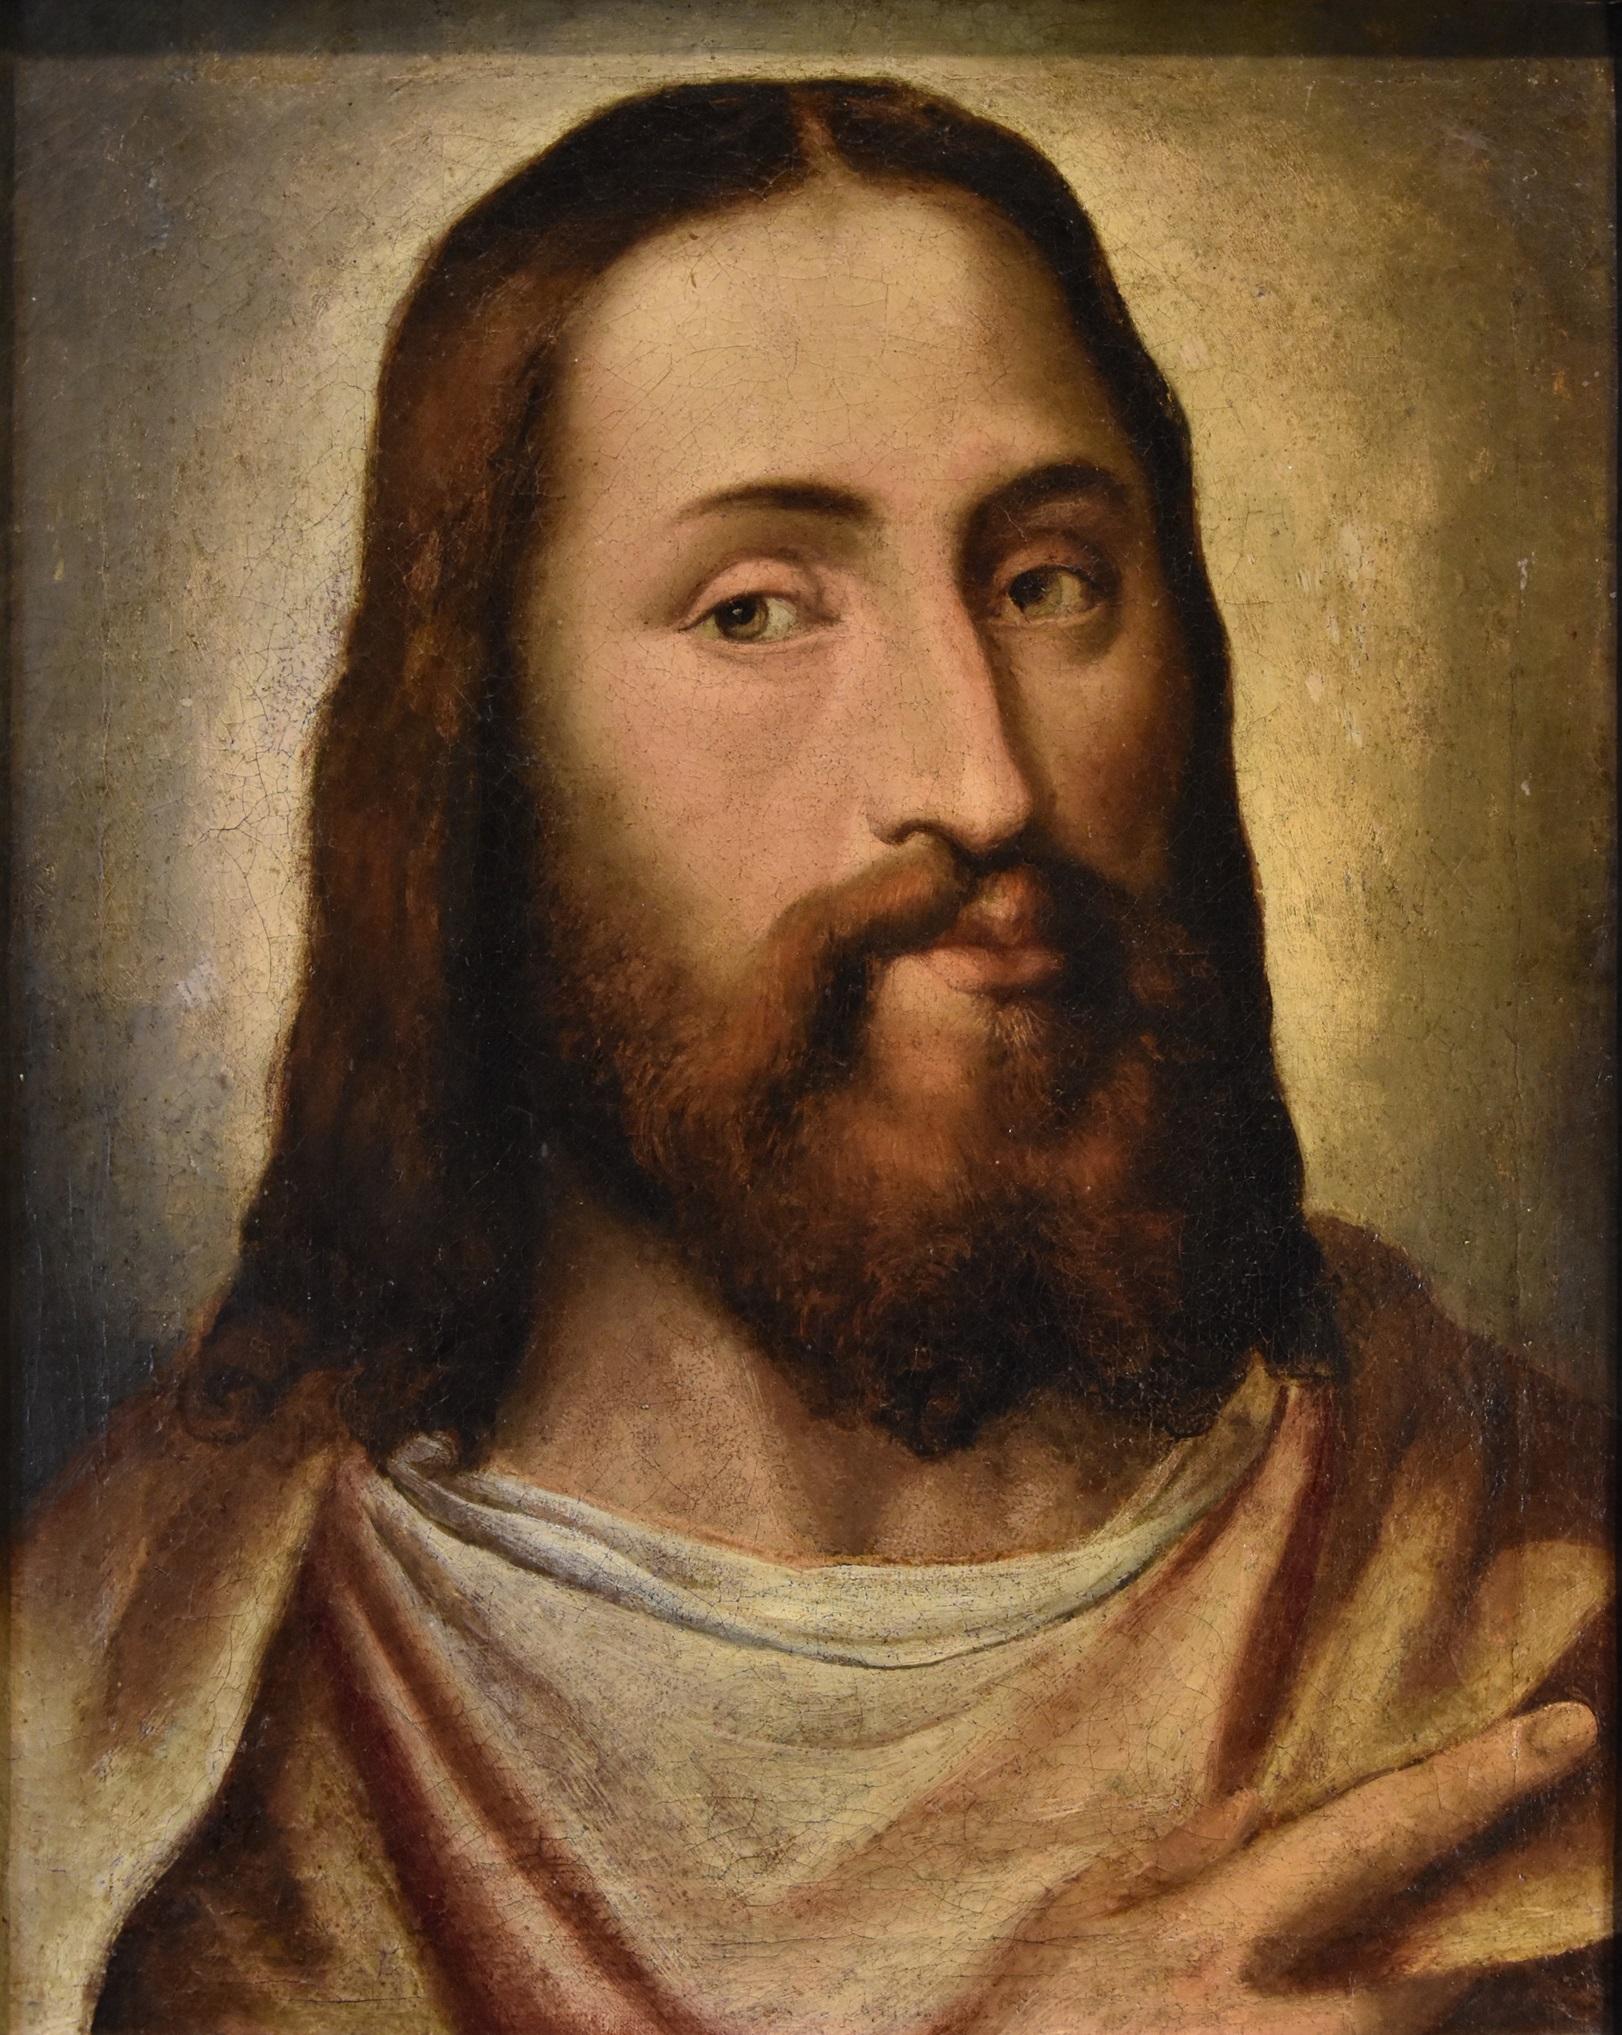 Portrait Christ Titian 16th Century Paint Oil on canvas Old master Venezia Italy 1